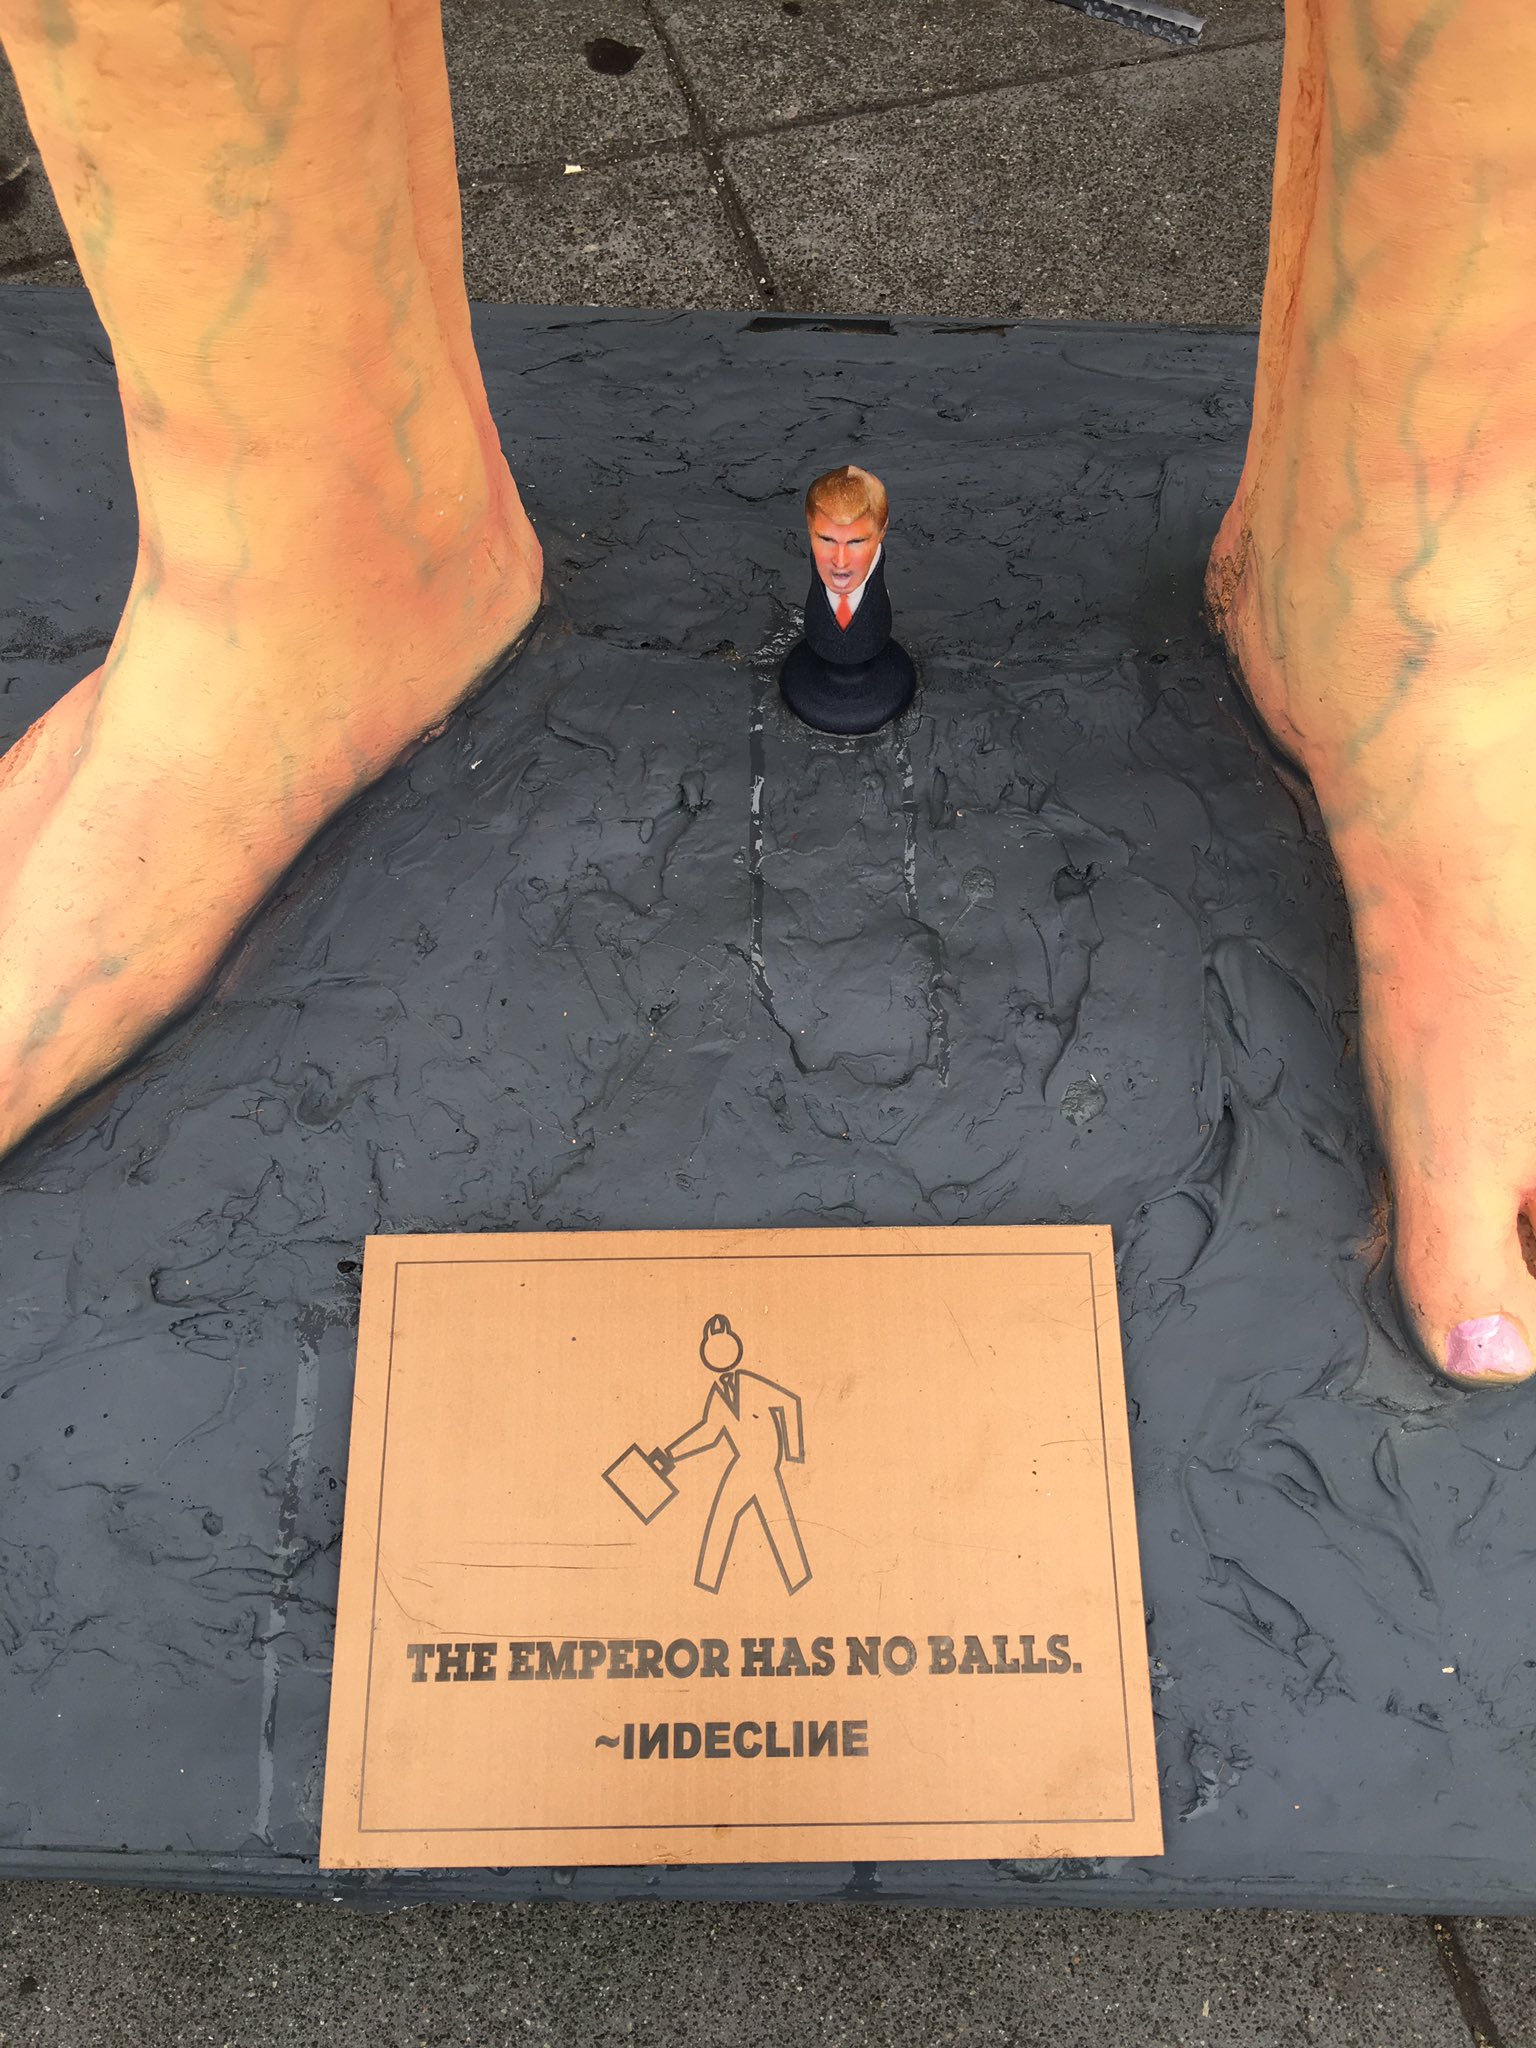 Larry-bob on Twitter: Naked Donald Trump plop art 